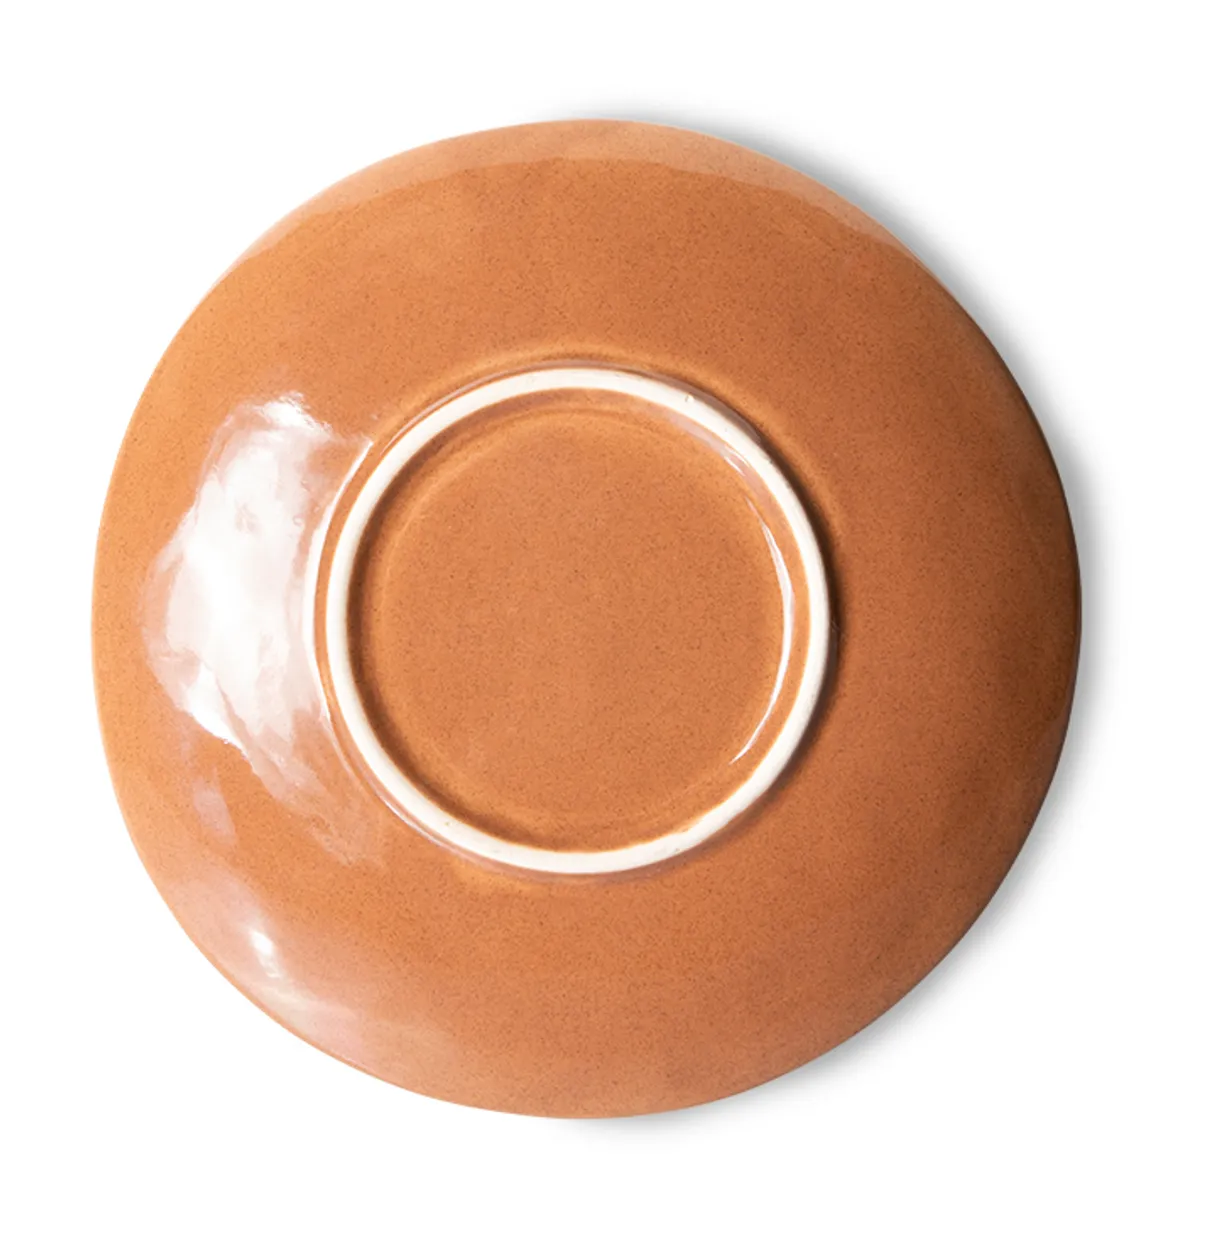 70s ceramics: dessert plates, eclipse (set of 2)